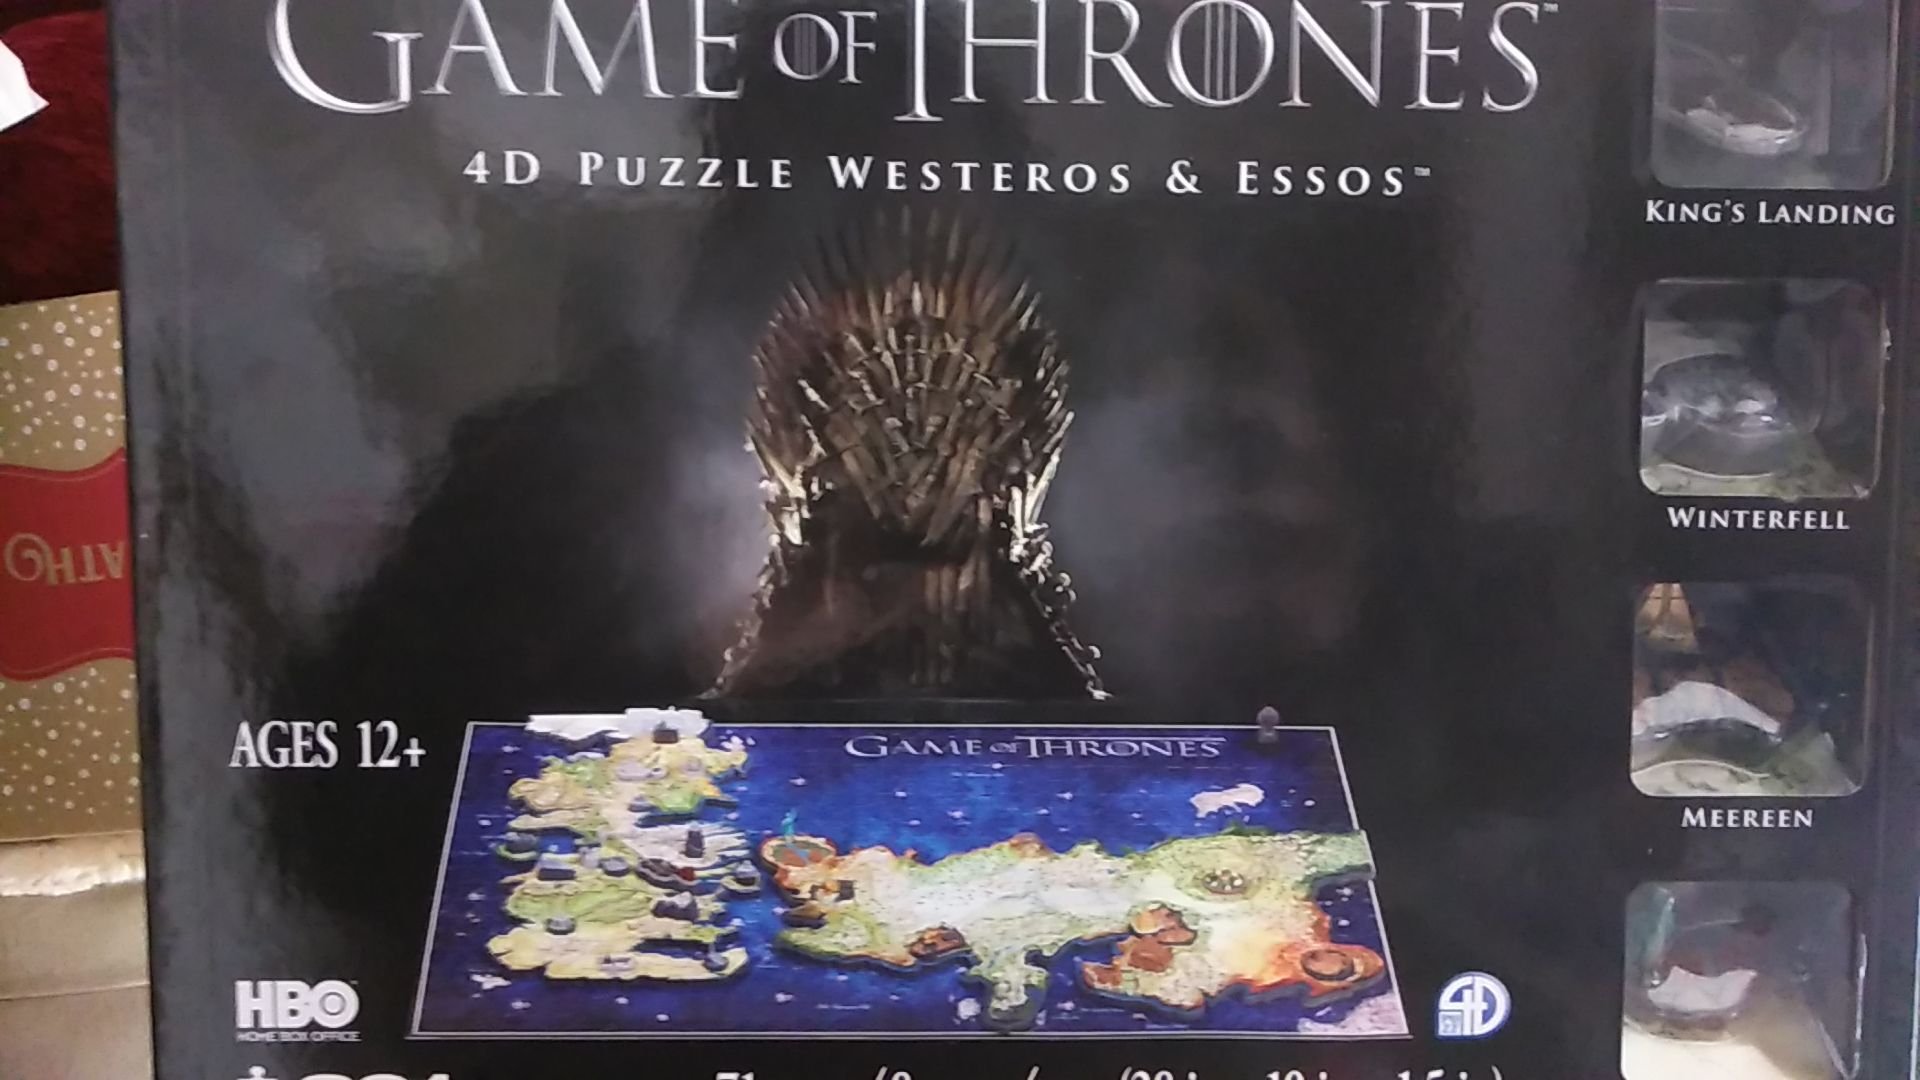 Game of Thrones 4D Puzzles of Westerns & Essos